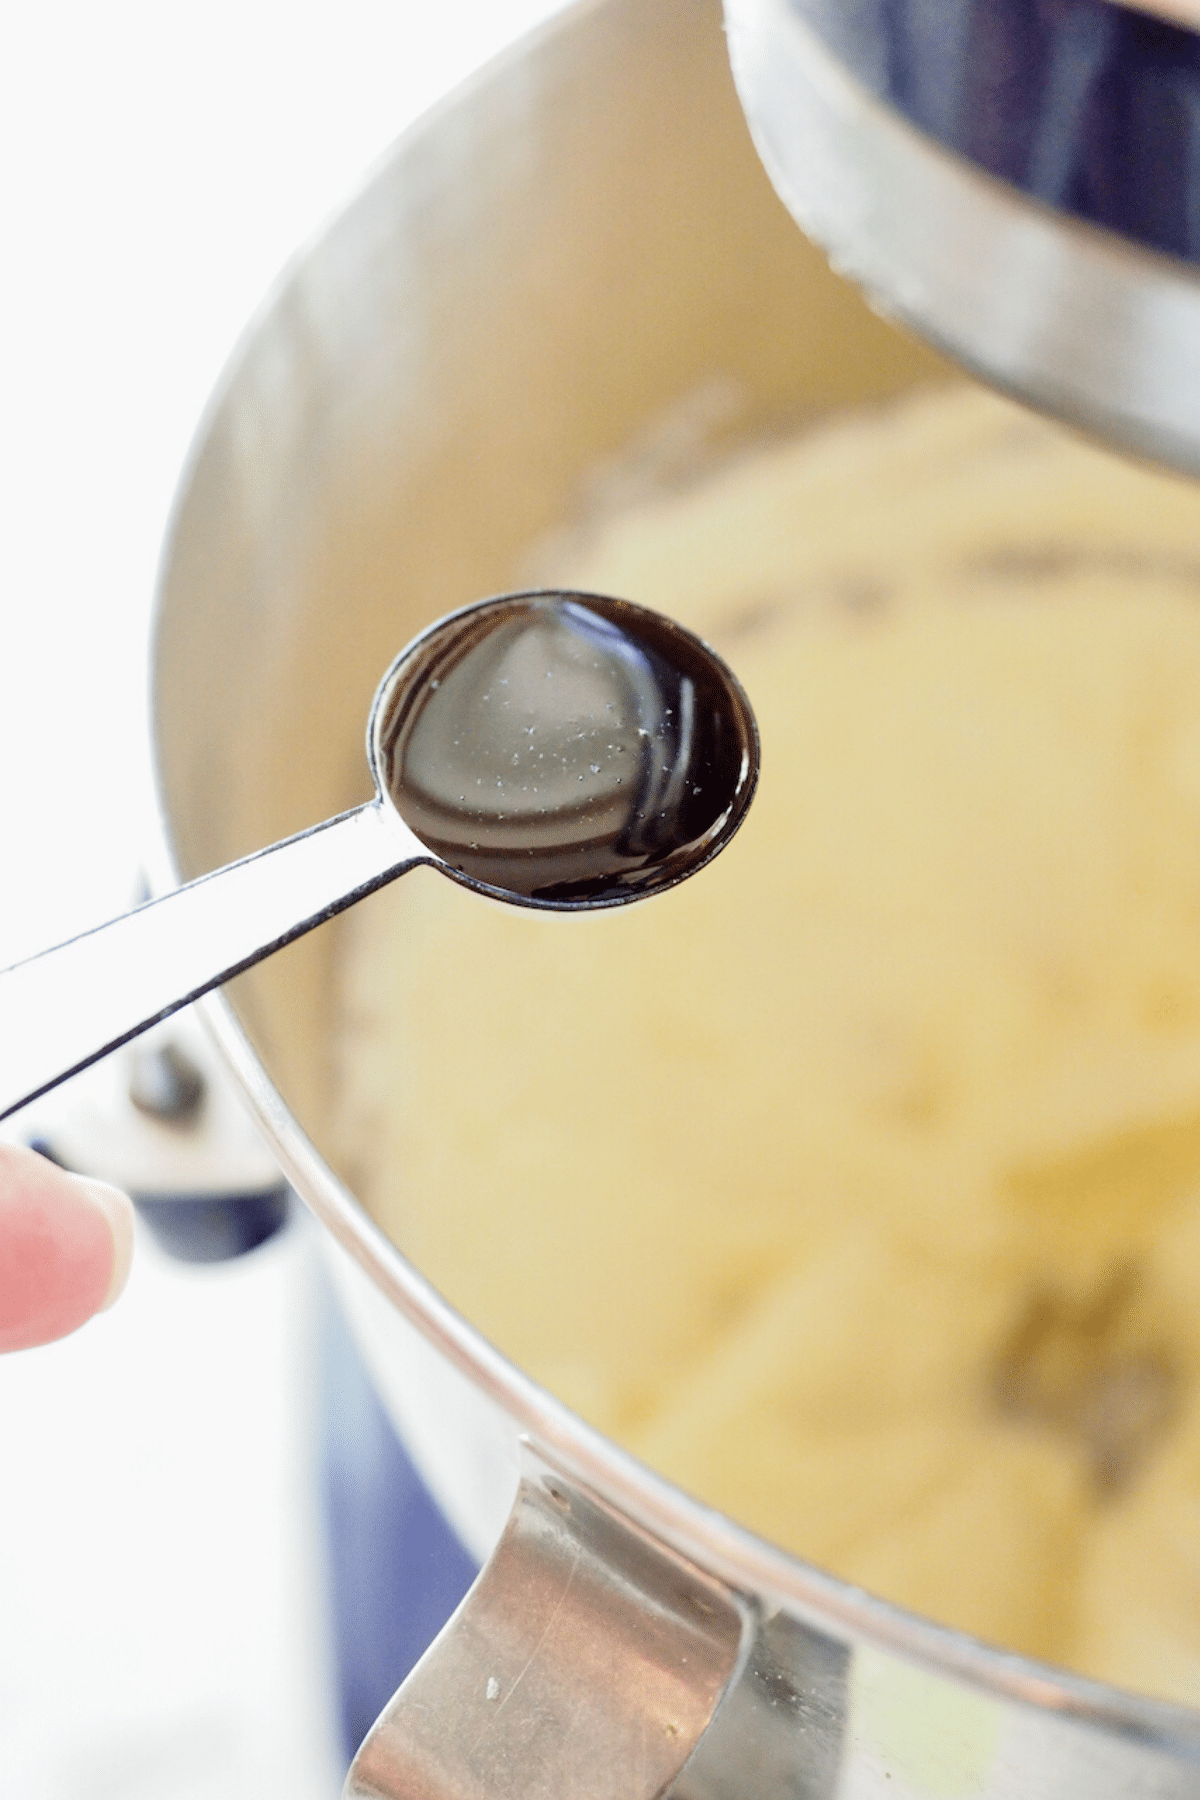 Adding vanilla bean paste into cream cheese frosting.